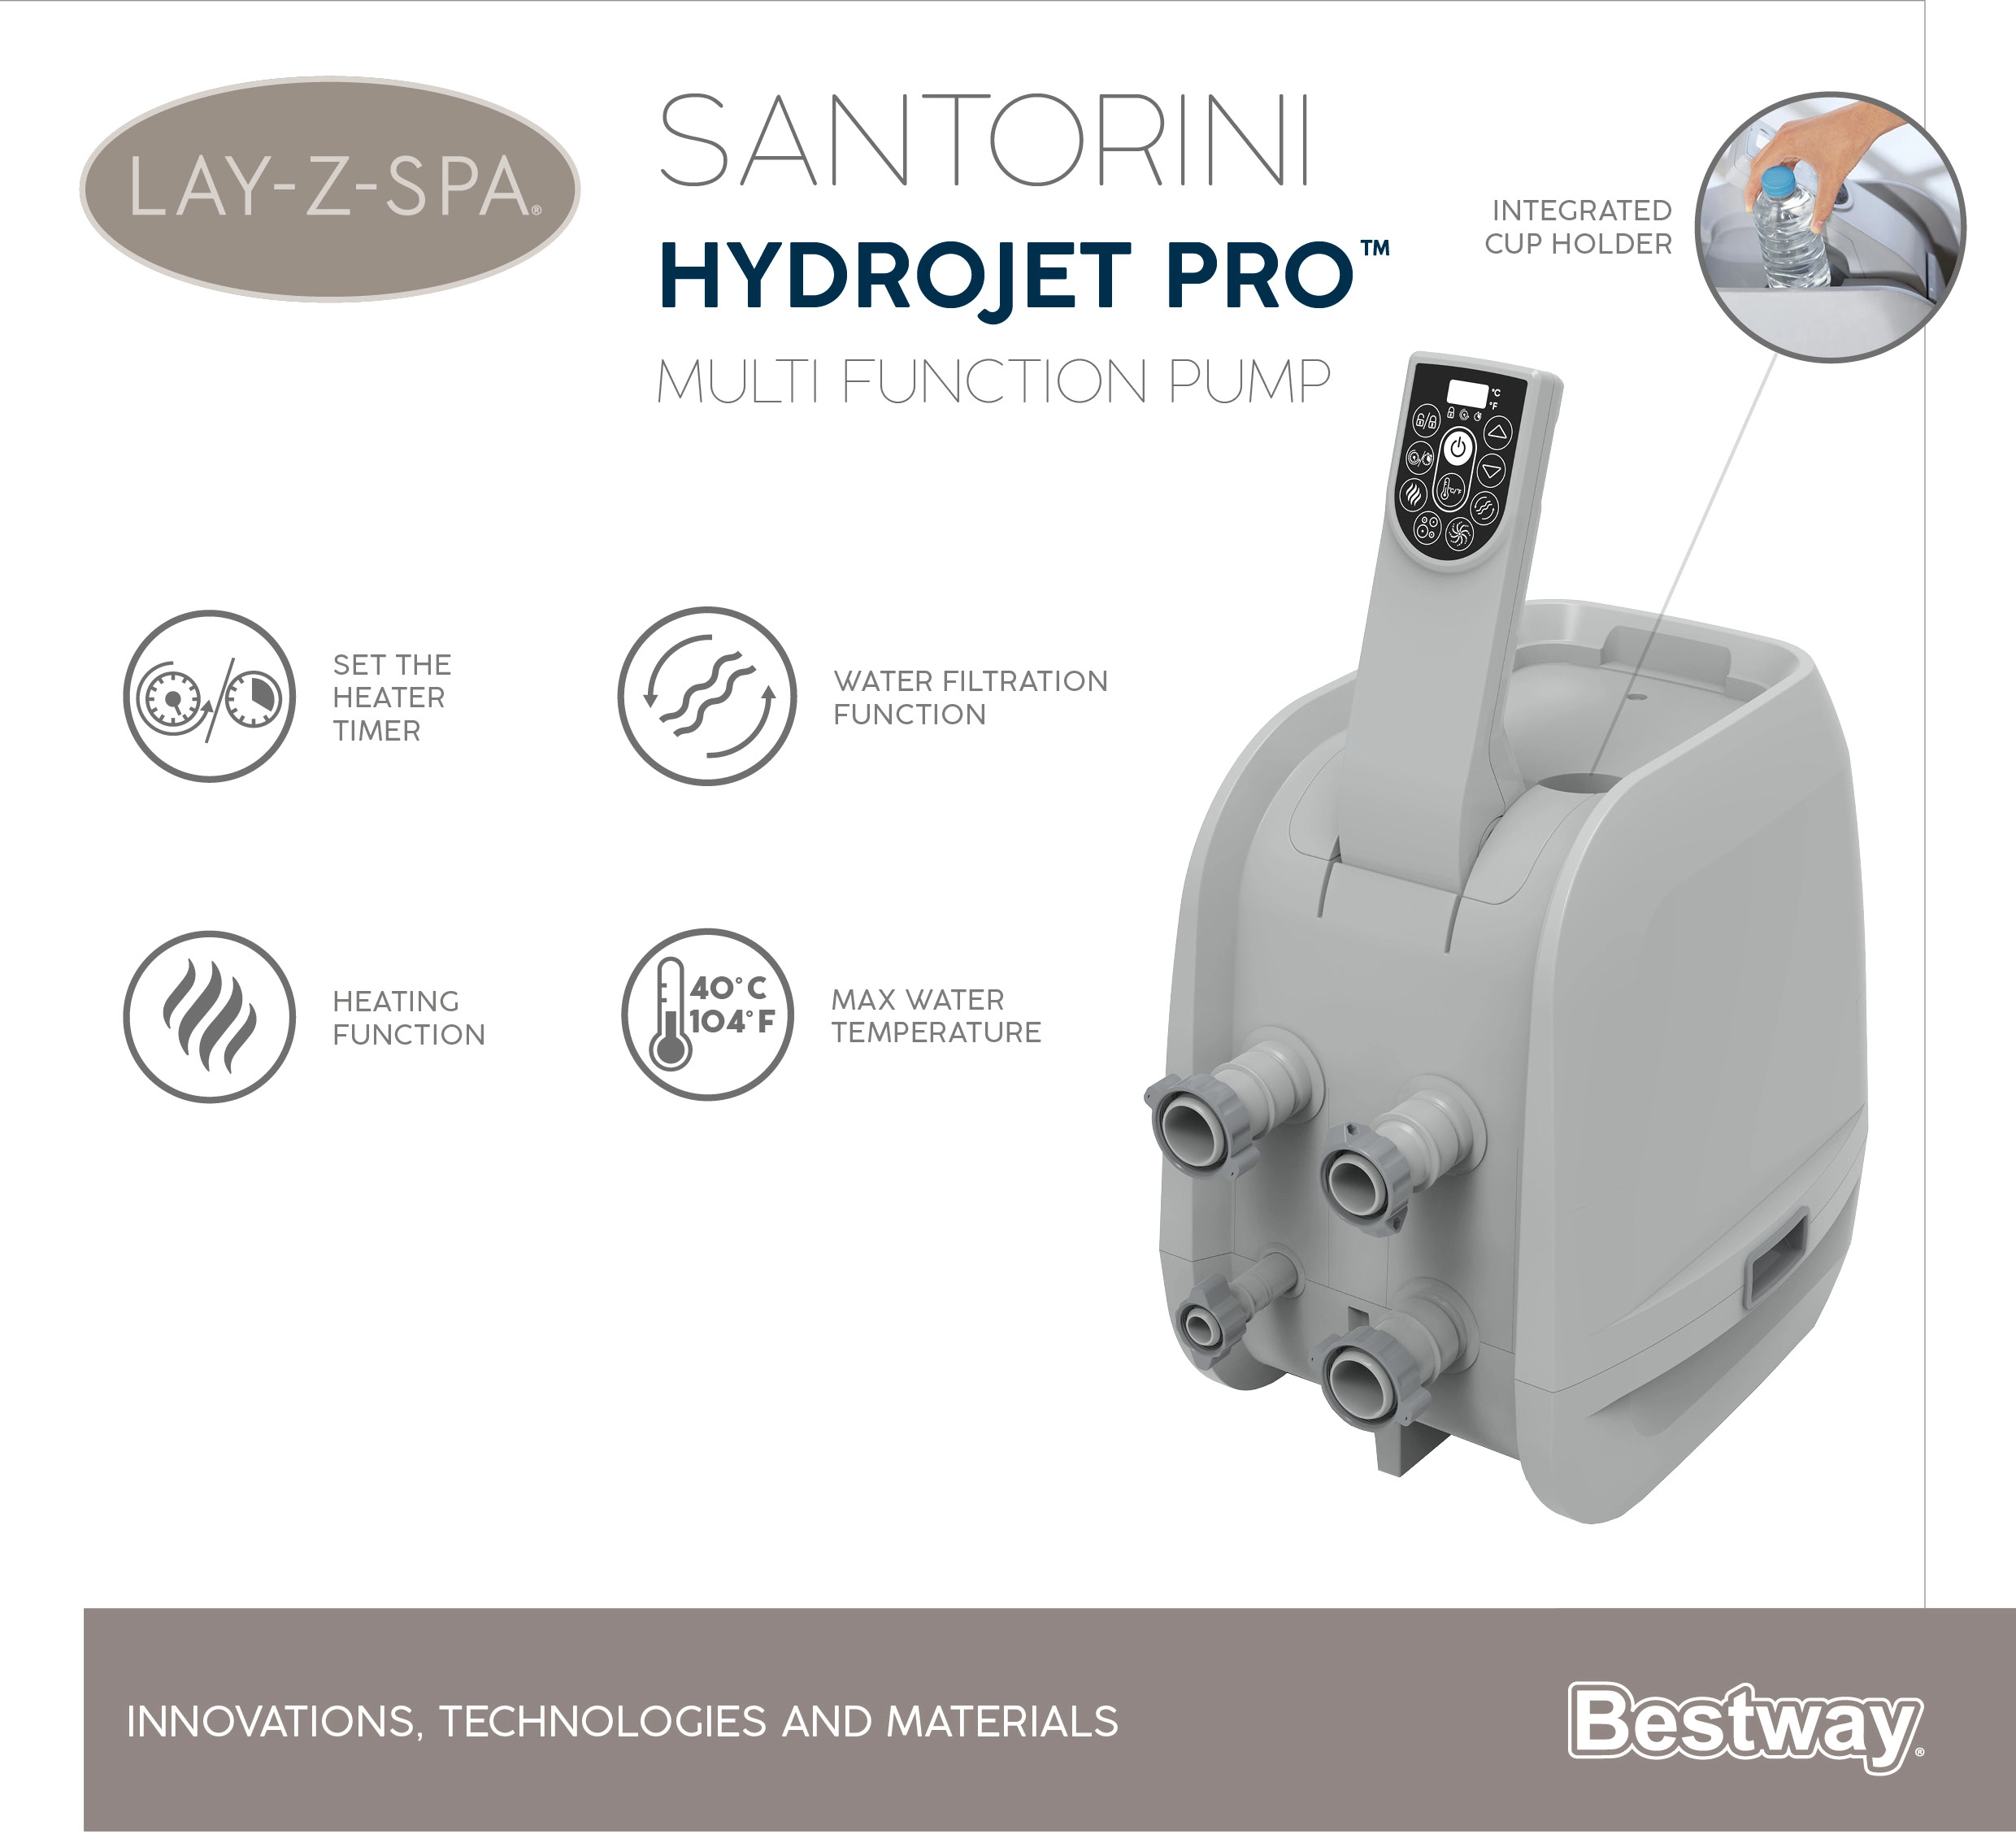 Santorini kaufen Bestway Whirlpool LAY-Z-SPA 216 Pro OBI x bei 80 cm Rund HydroJet